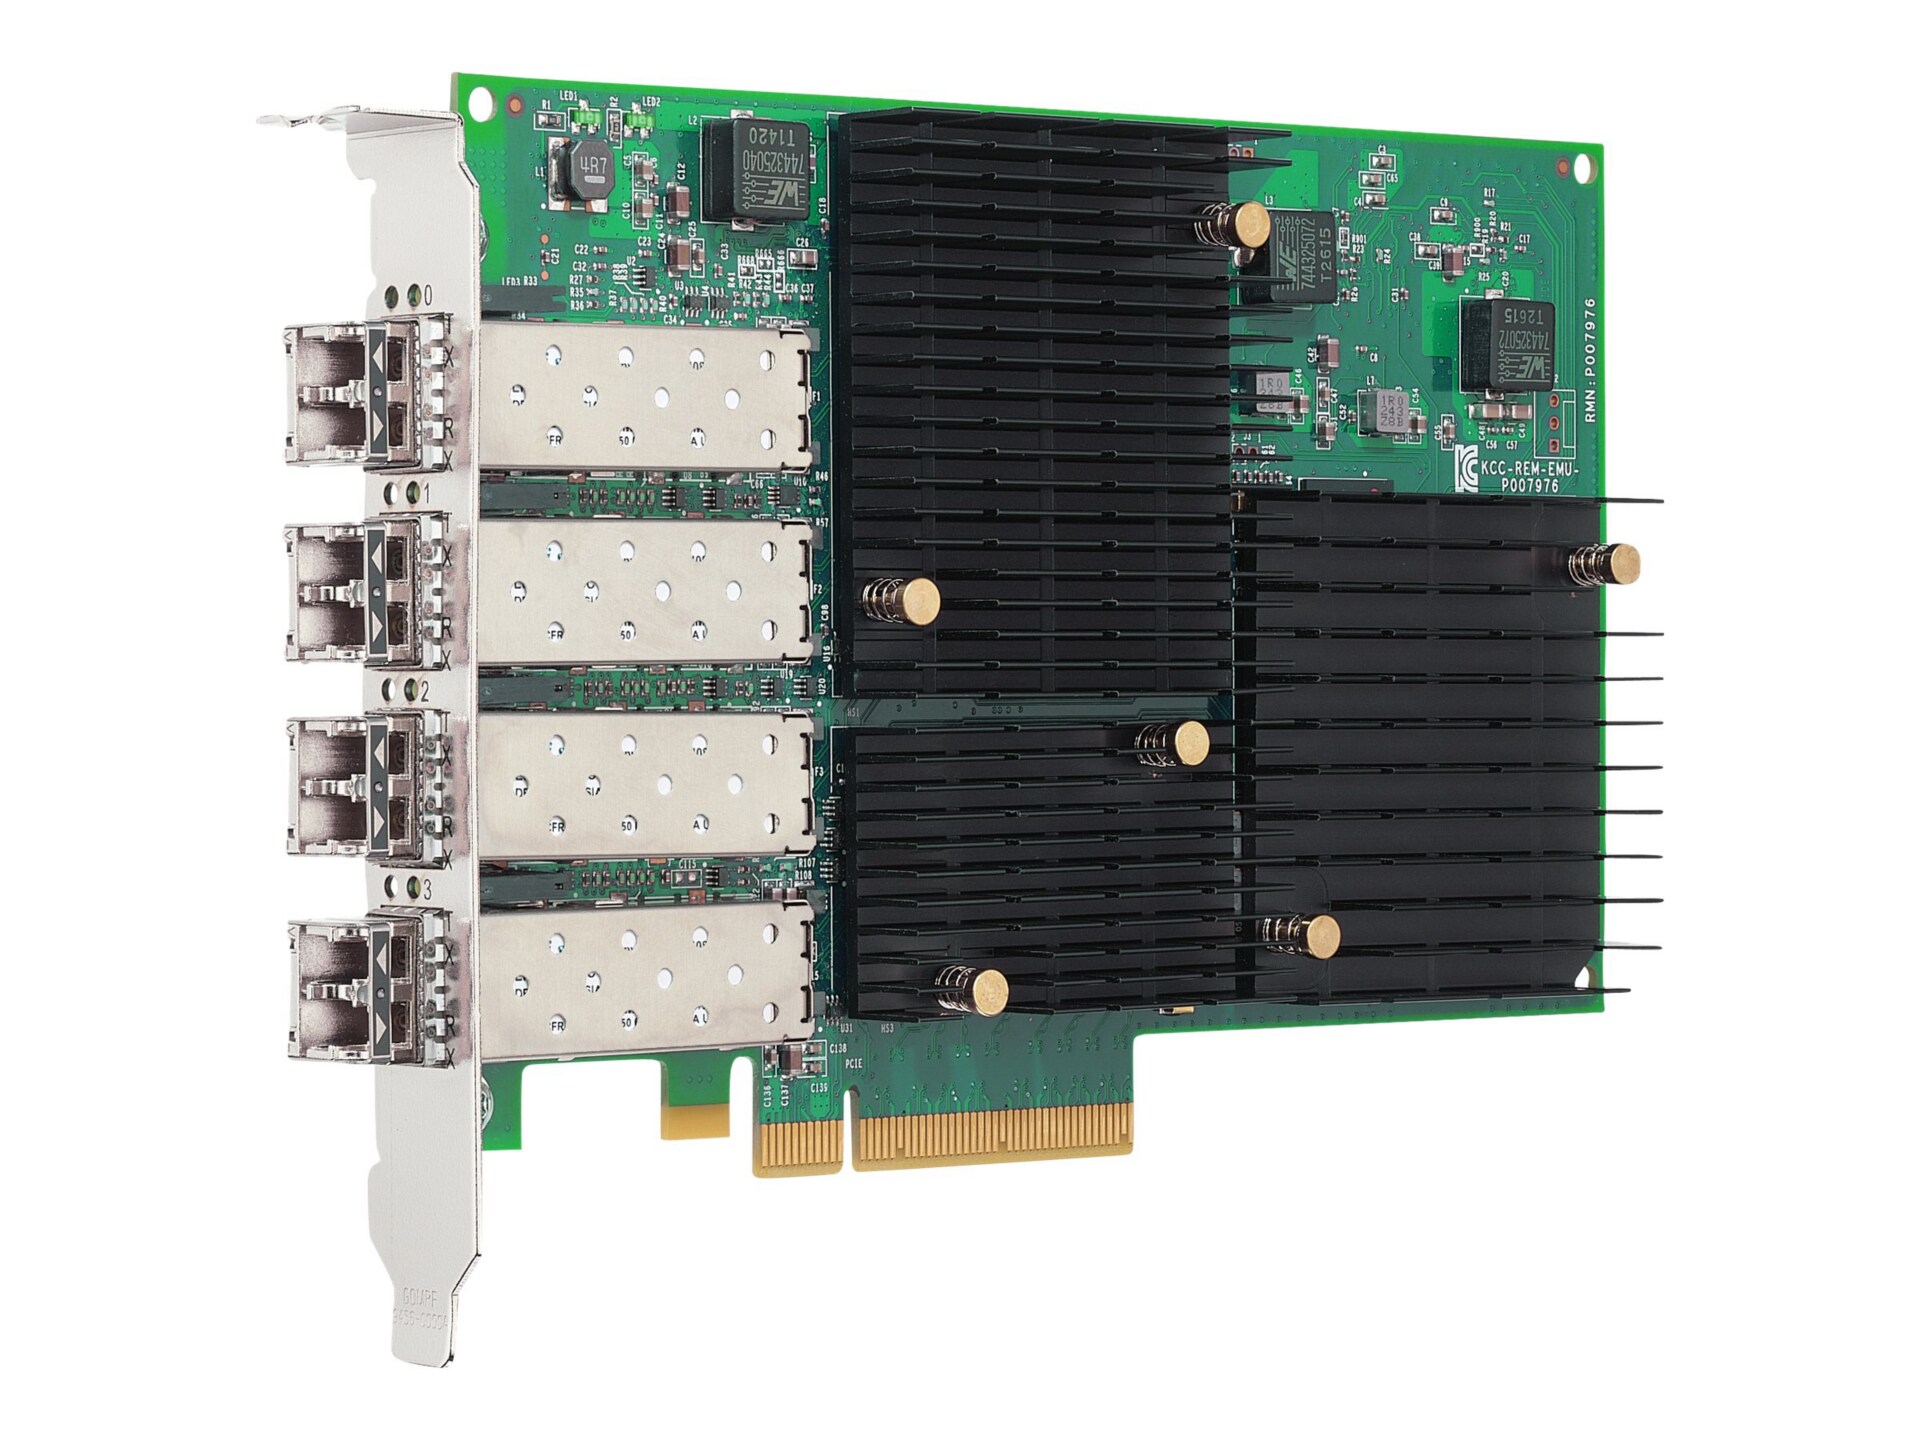 Emulex LPe16004-M6 Gen 5 (16Gb), single-port HBA - host bus adapter